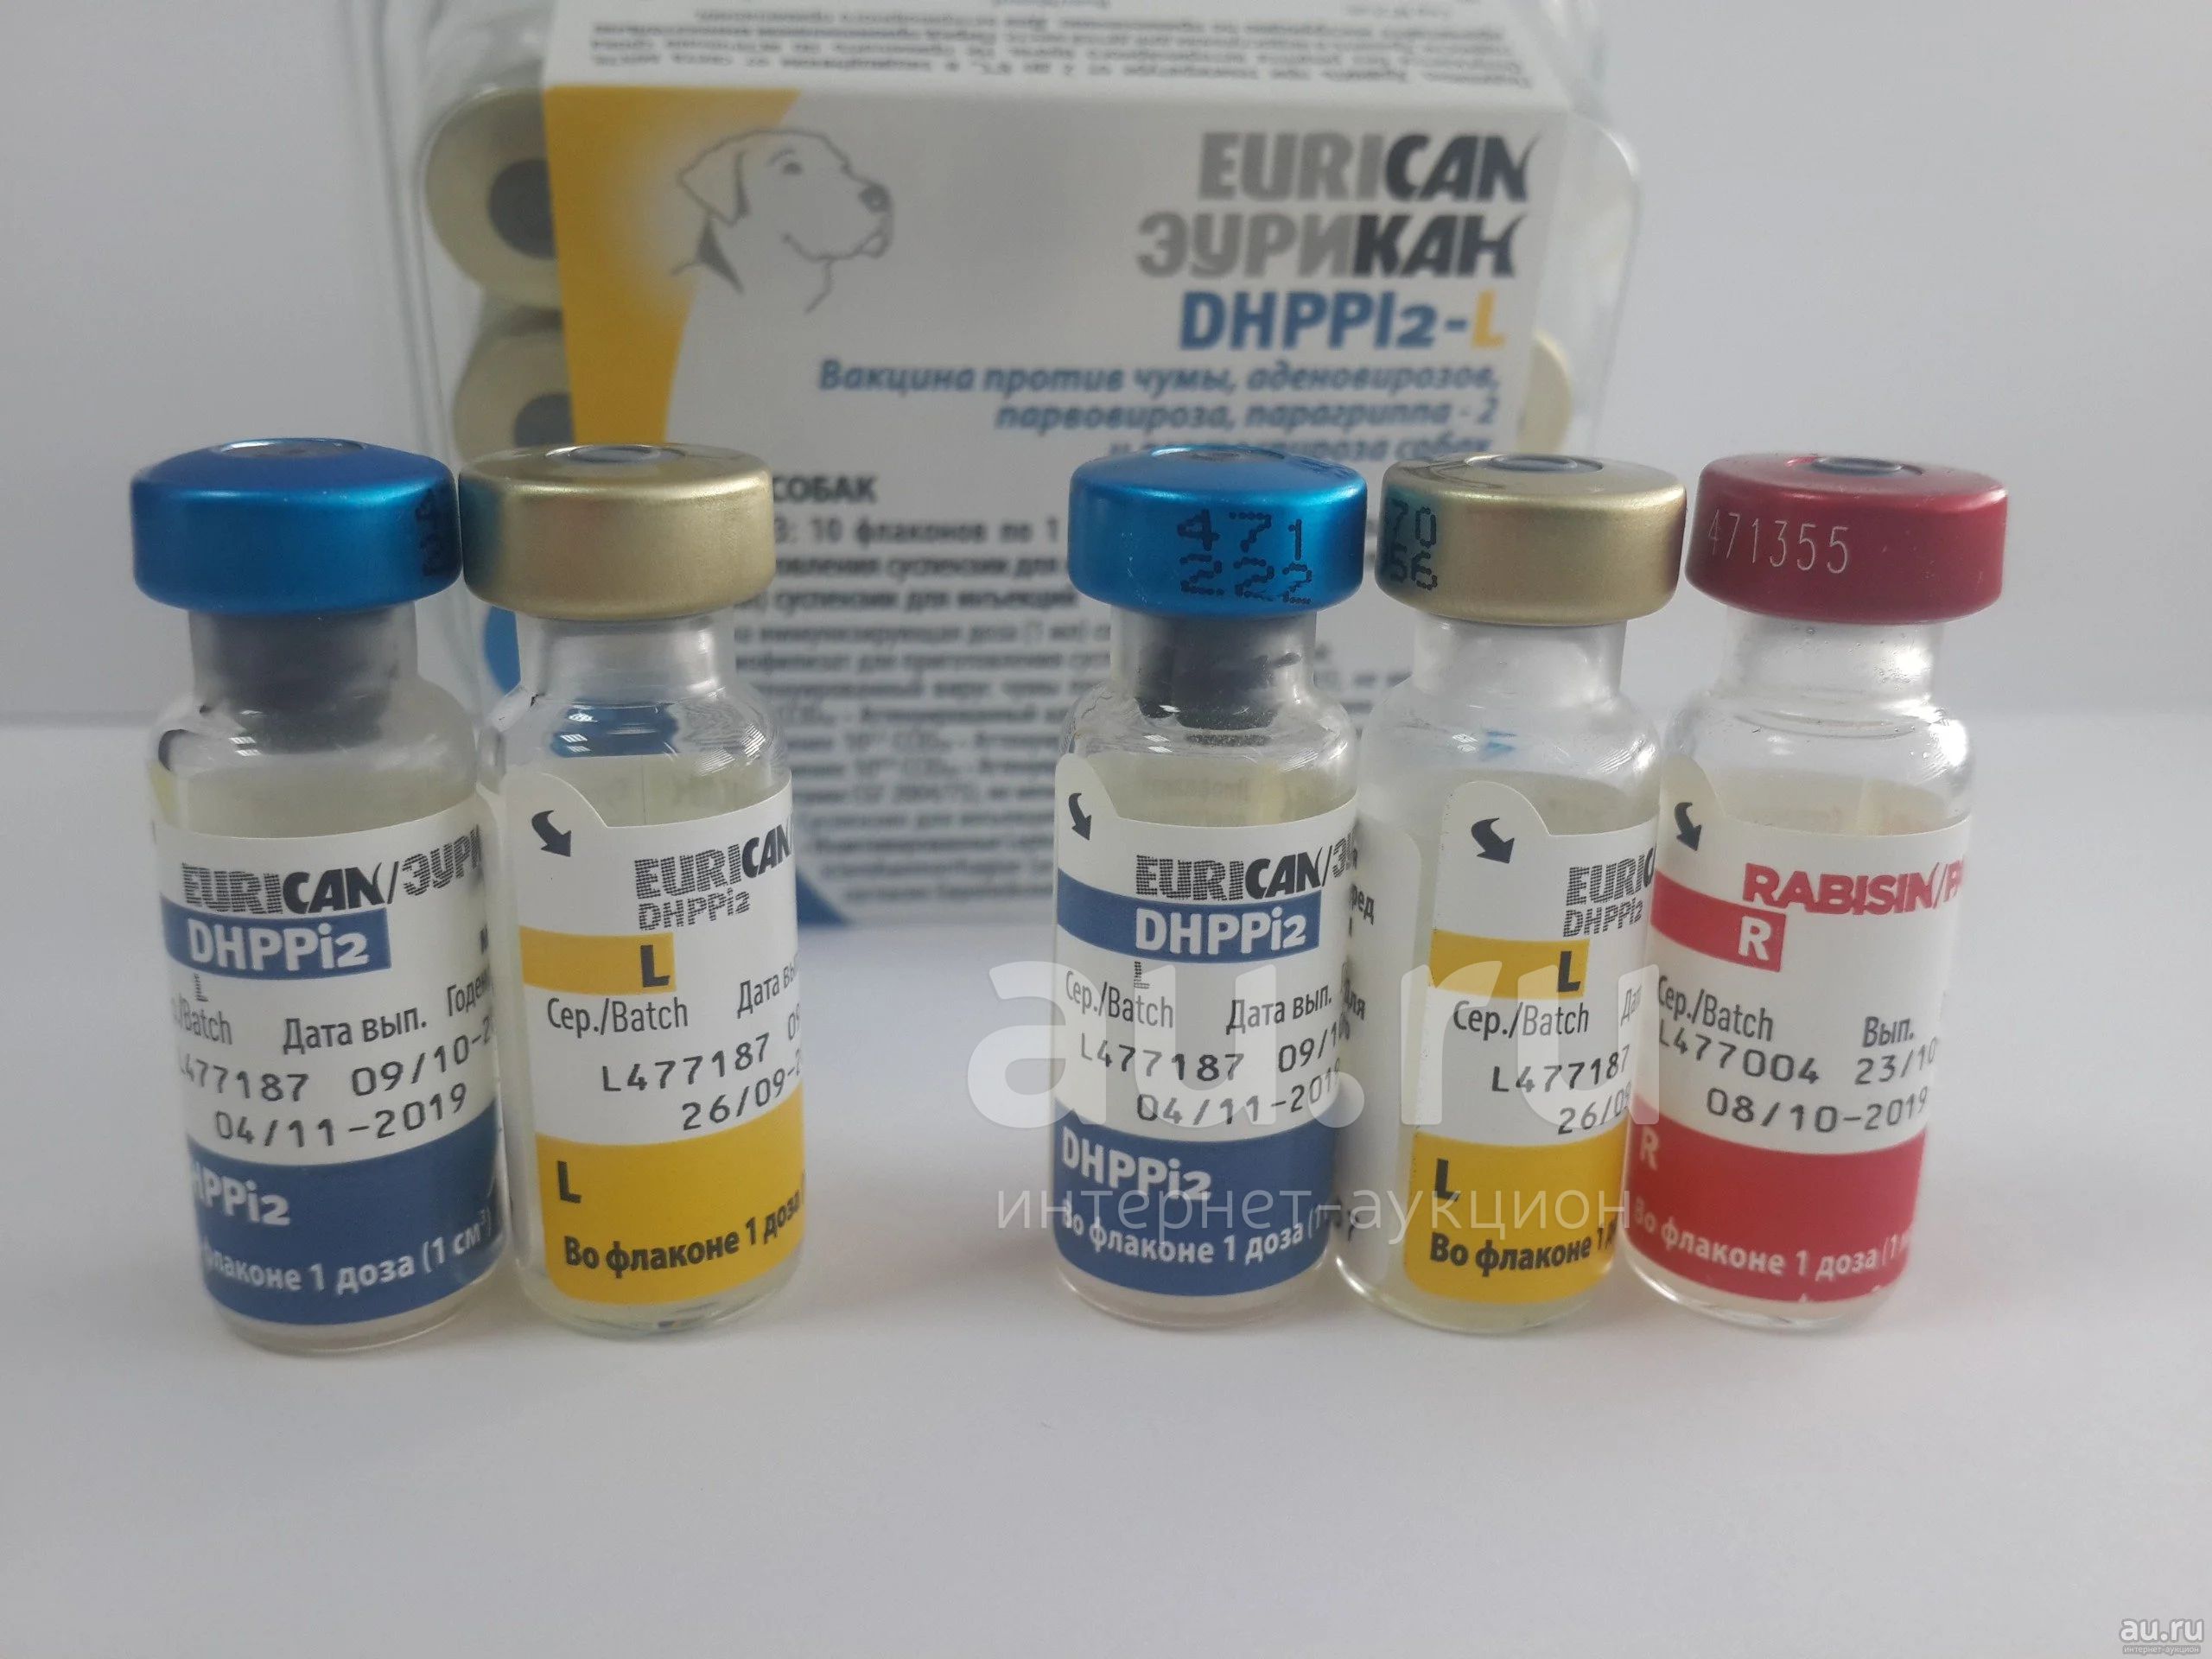 Вакцина эурикан dhppi2. Эурикан для кошек.